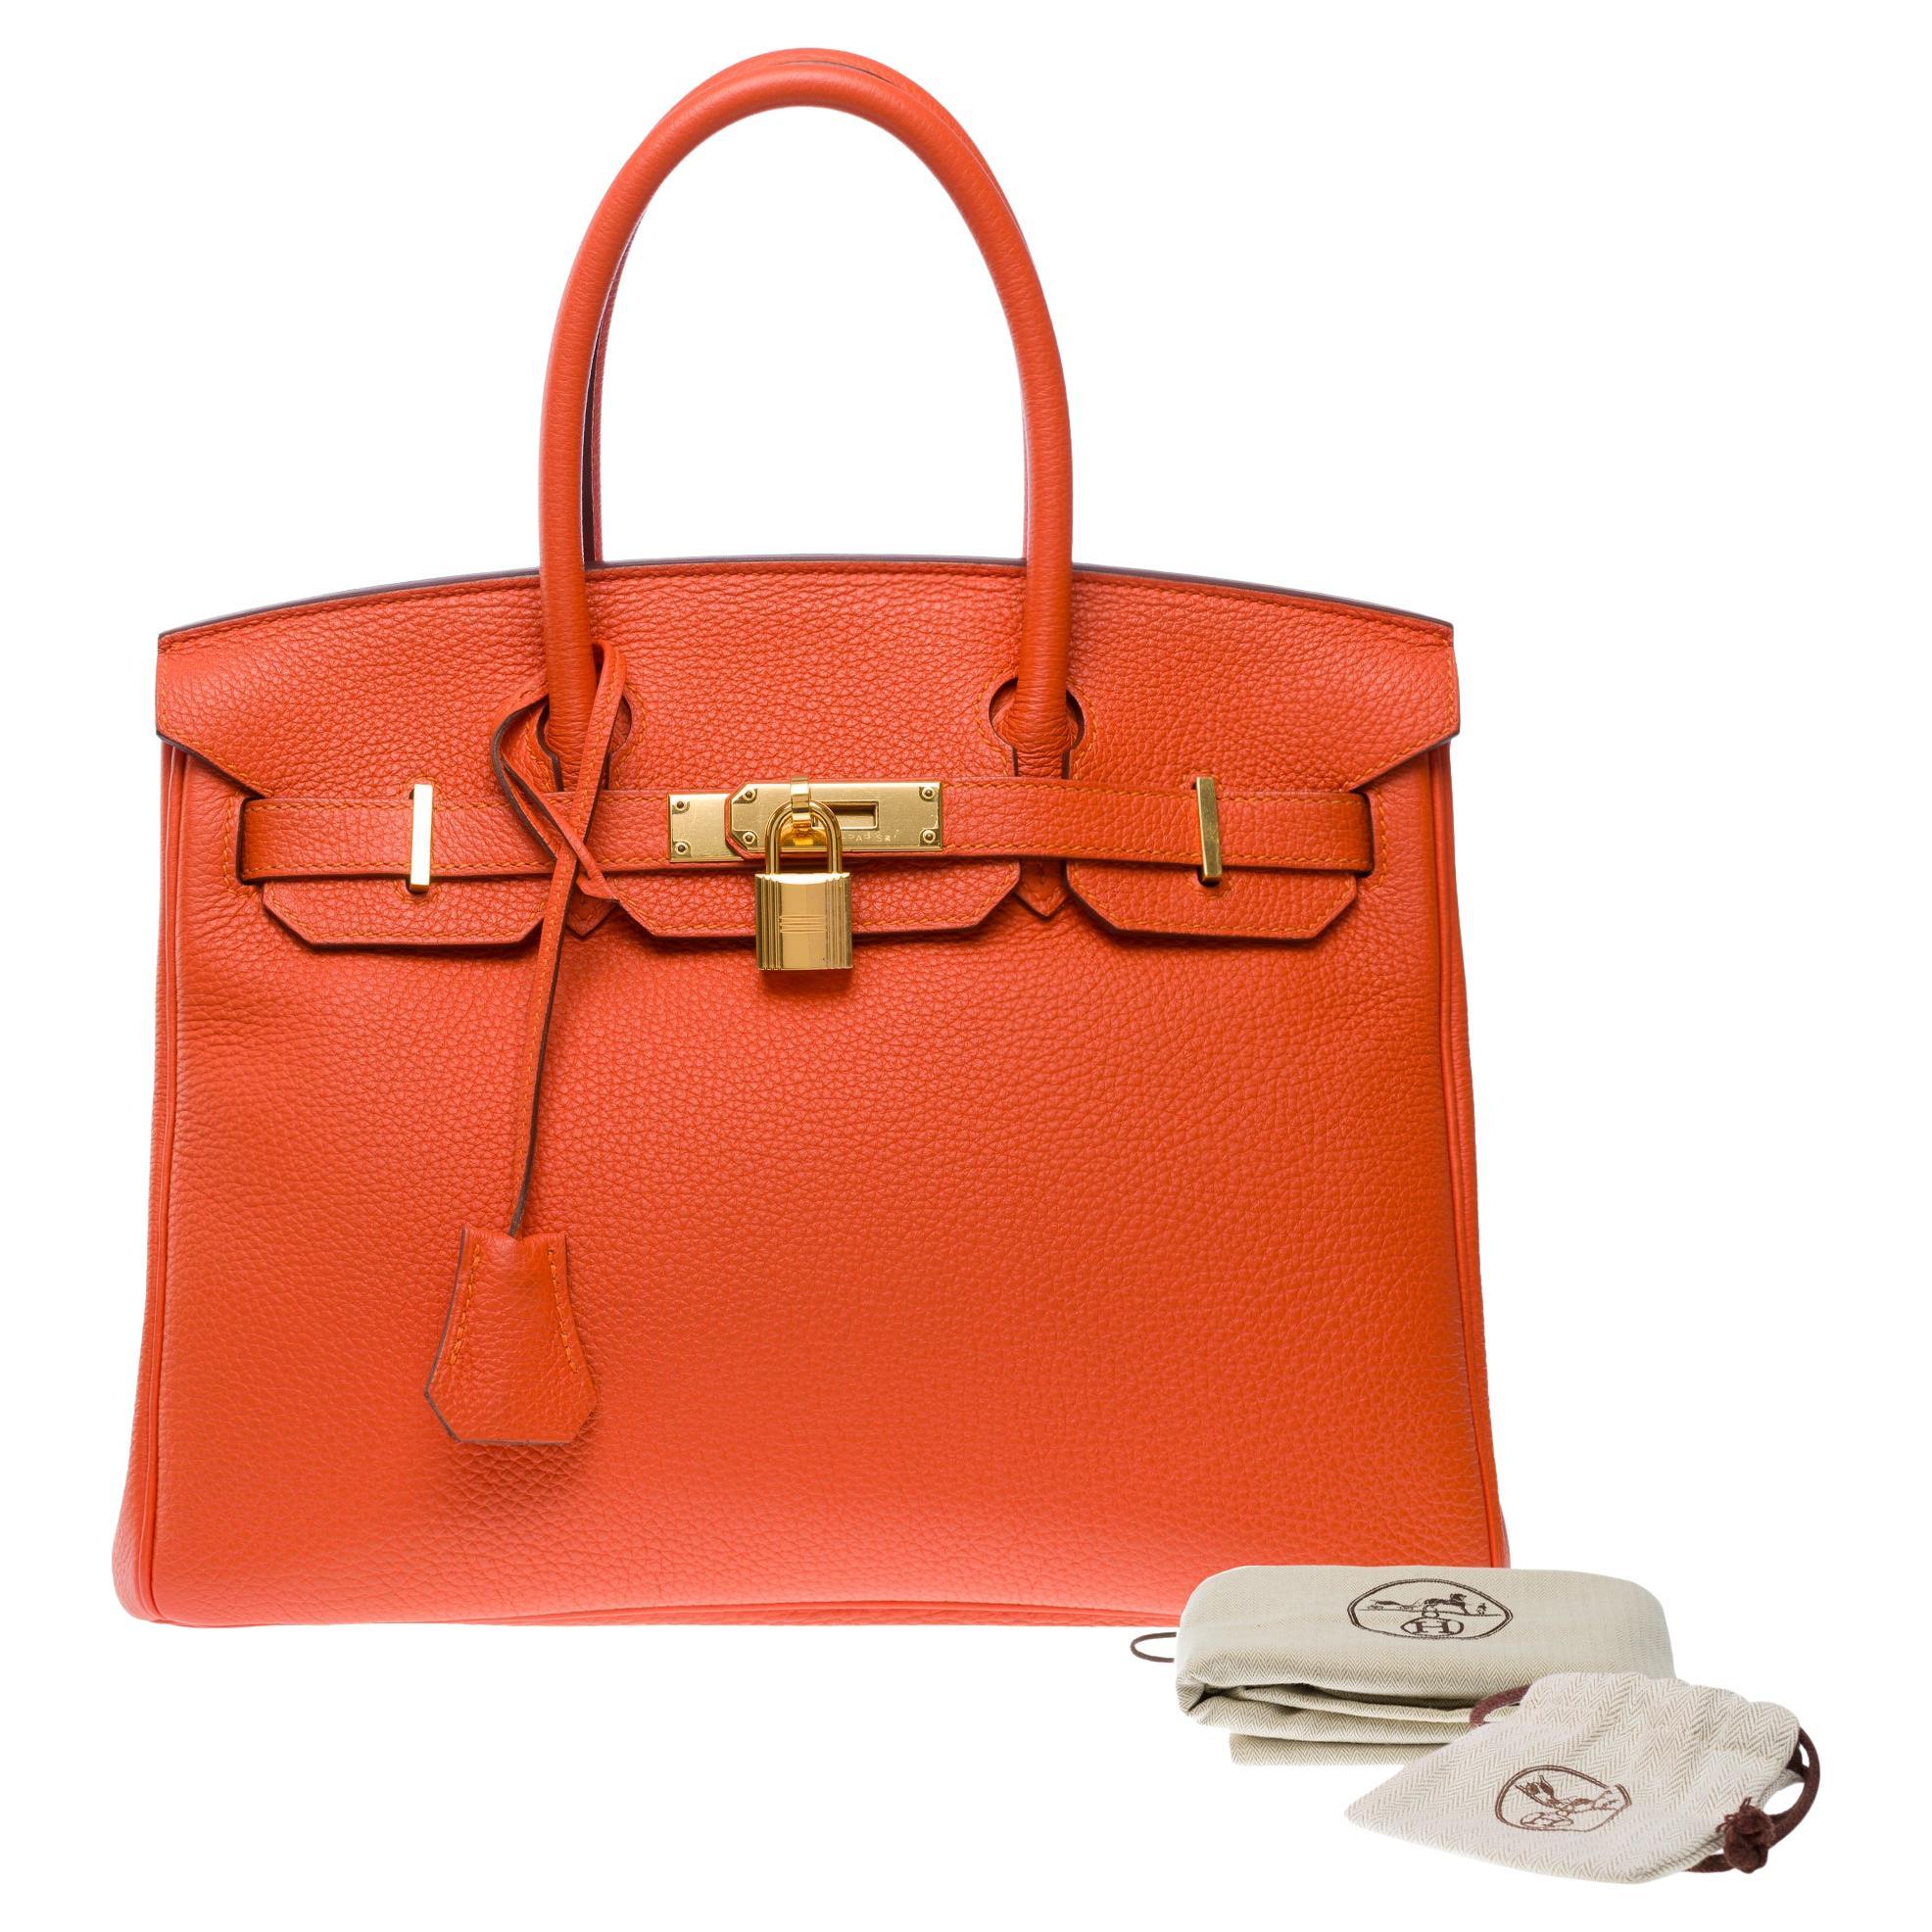 Superb Hermes Birkin 30 handbag in Taurillon Clemence Orange Poppy leather, GHW